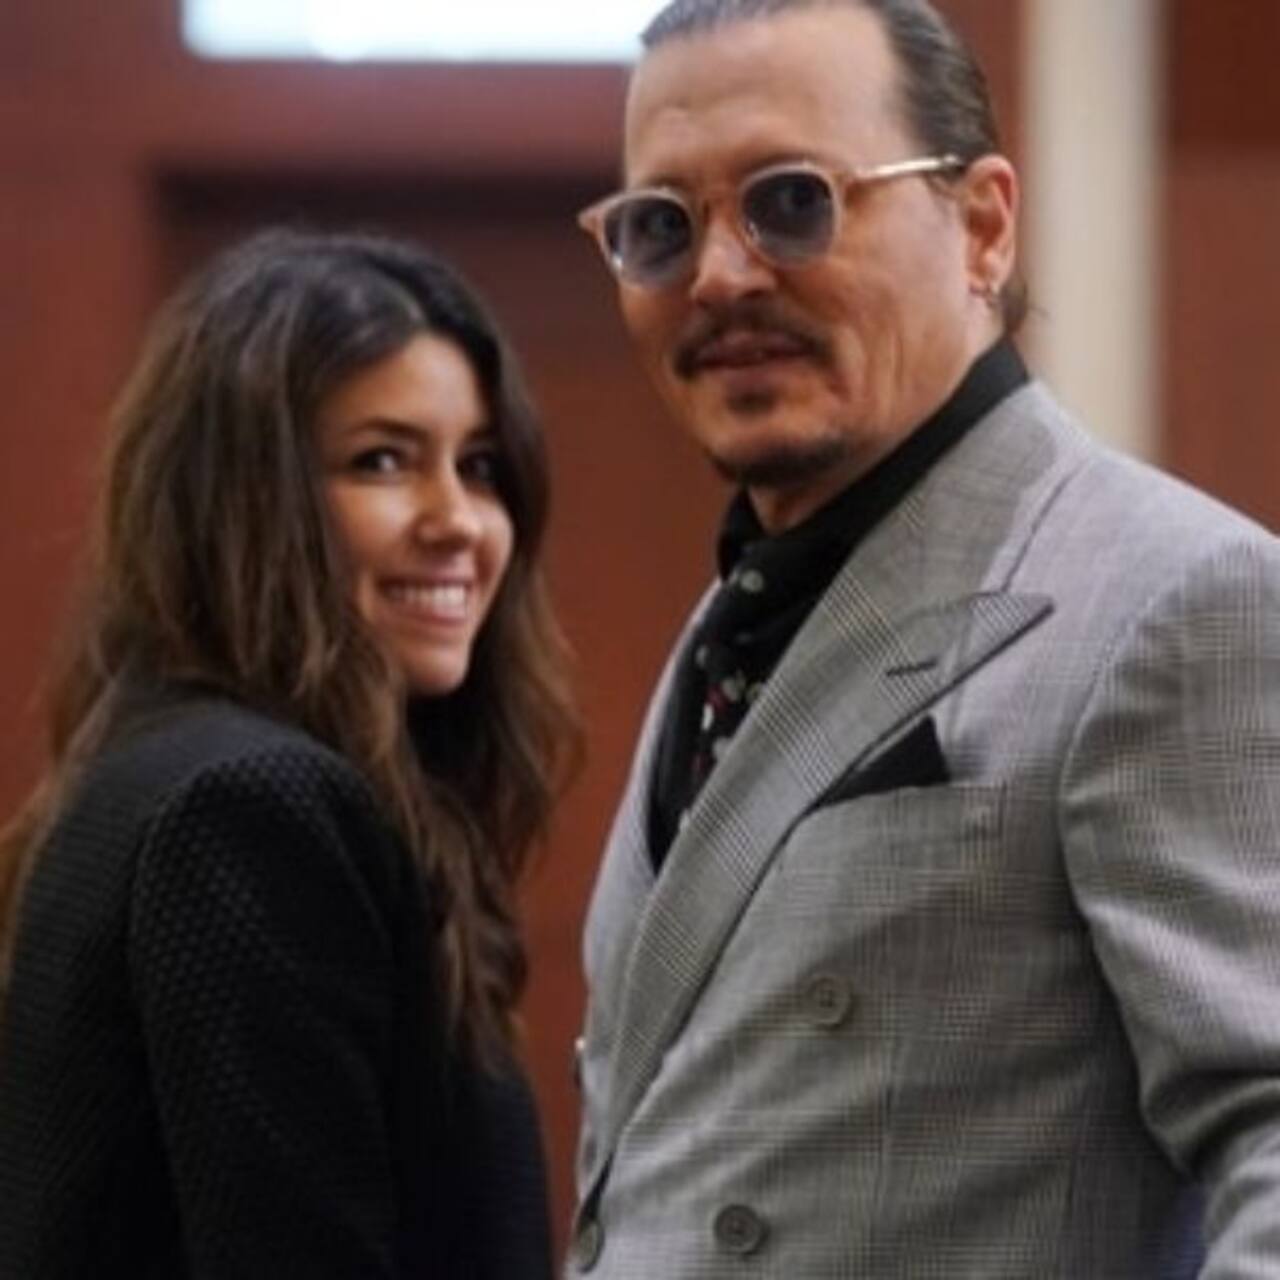 Johnny Depp's lawyer Camille Vasquez calls romance rumours 'sexist'